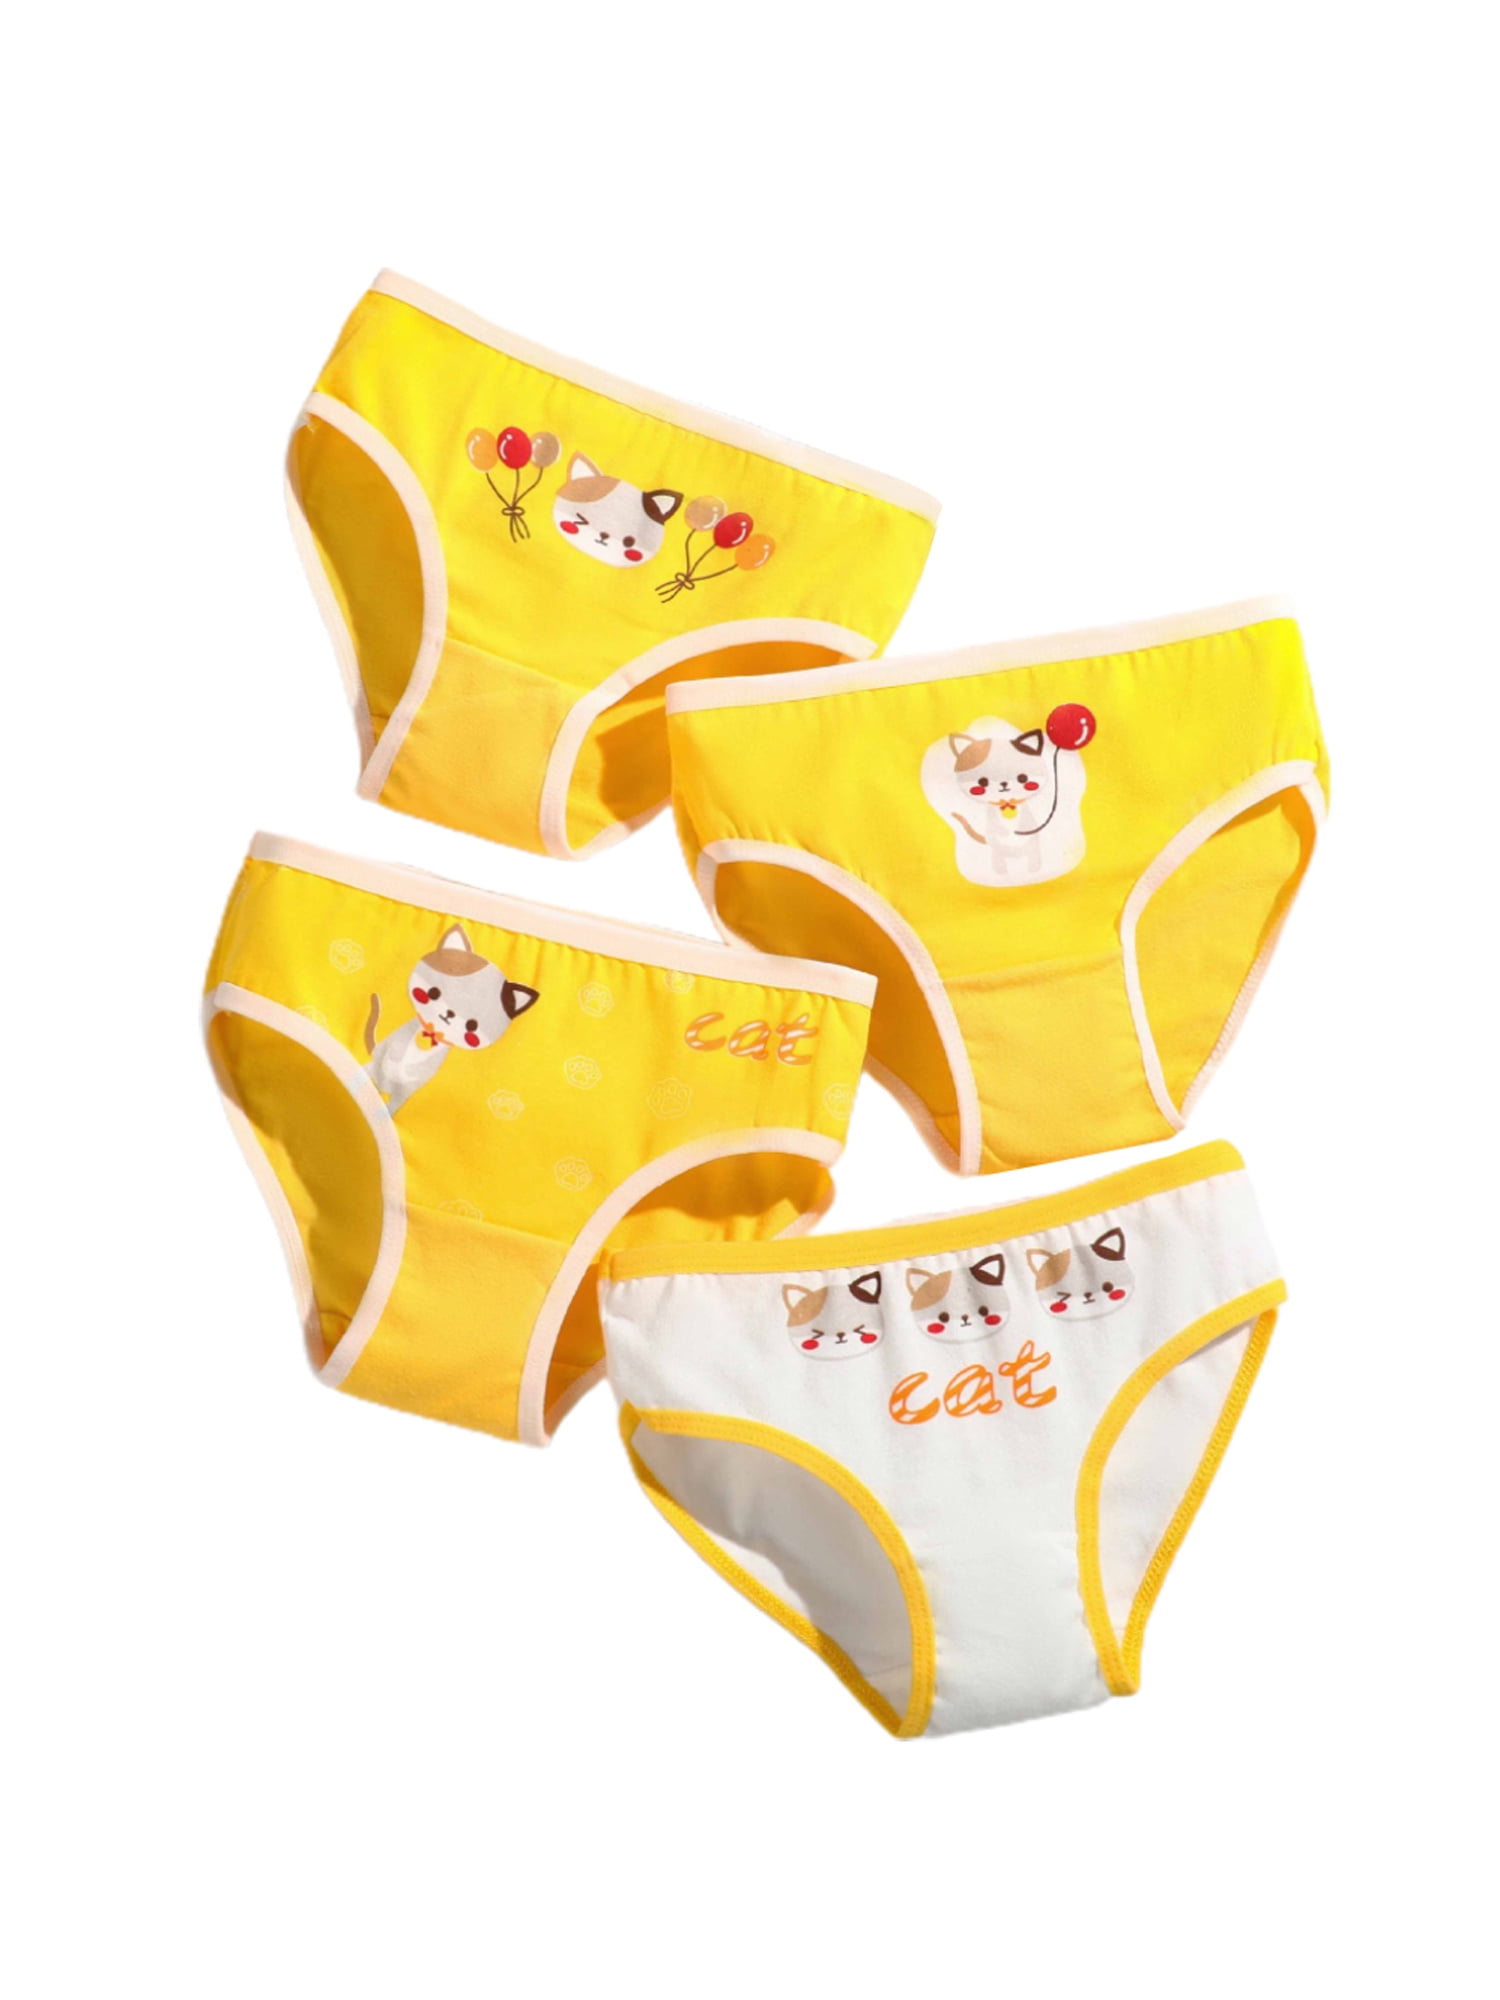 Pokemon Girls Underwear Pack of 5 Pikachu 6-14